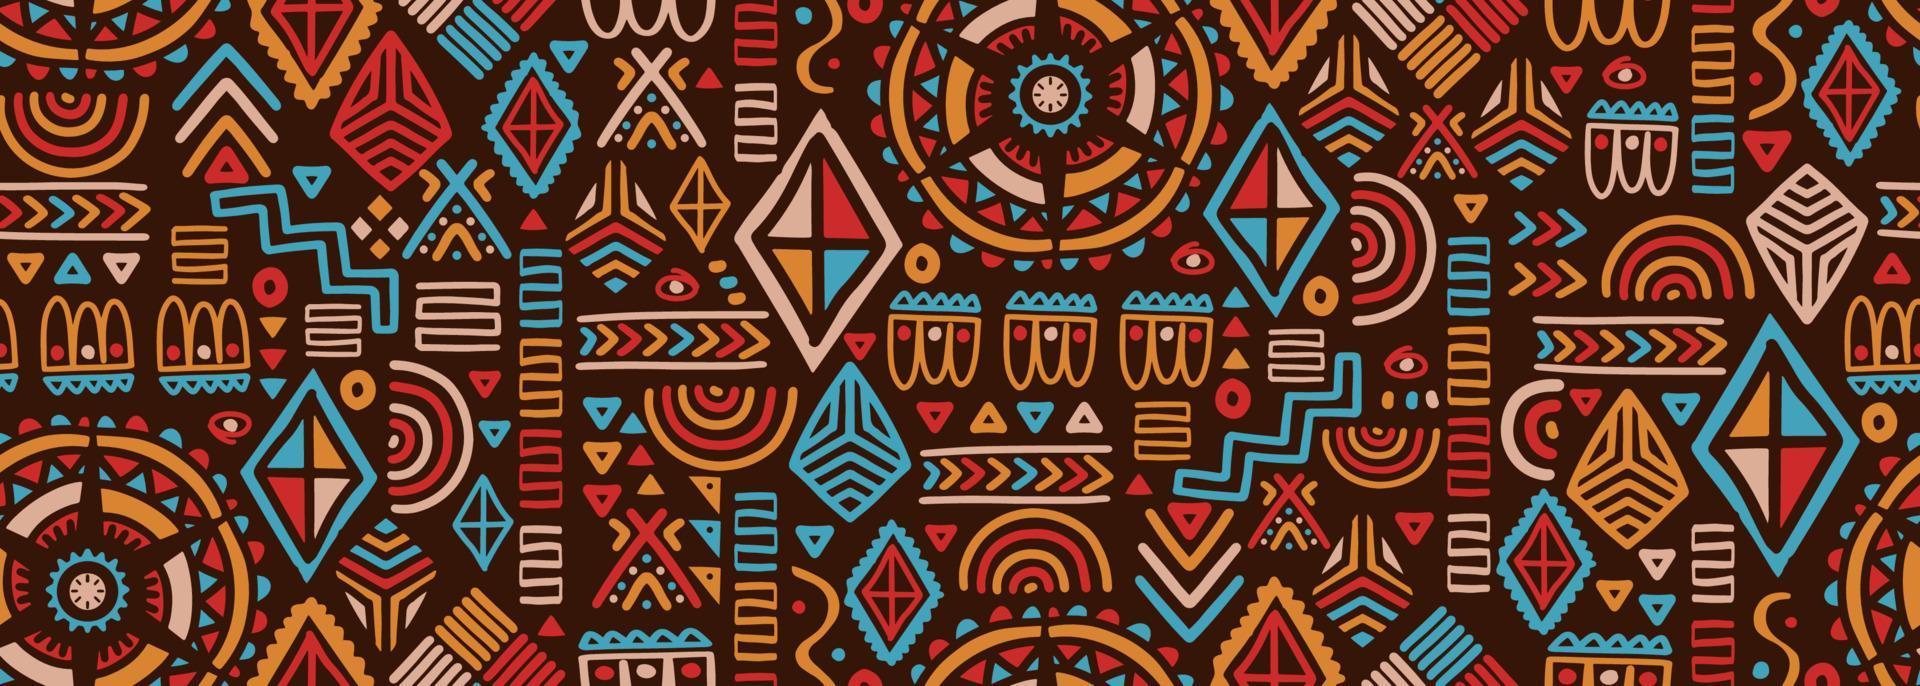 africano tribal sin costura modelo dibujo, garabatear elementos símbolo. vector